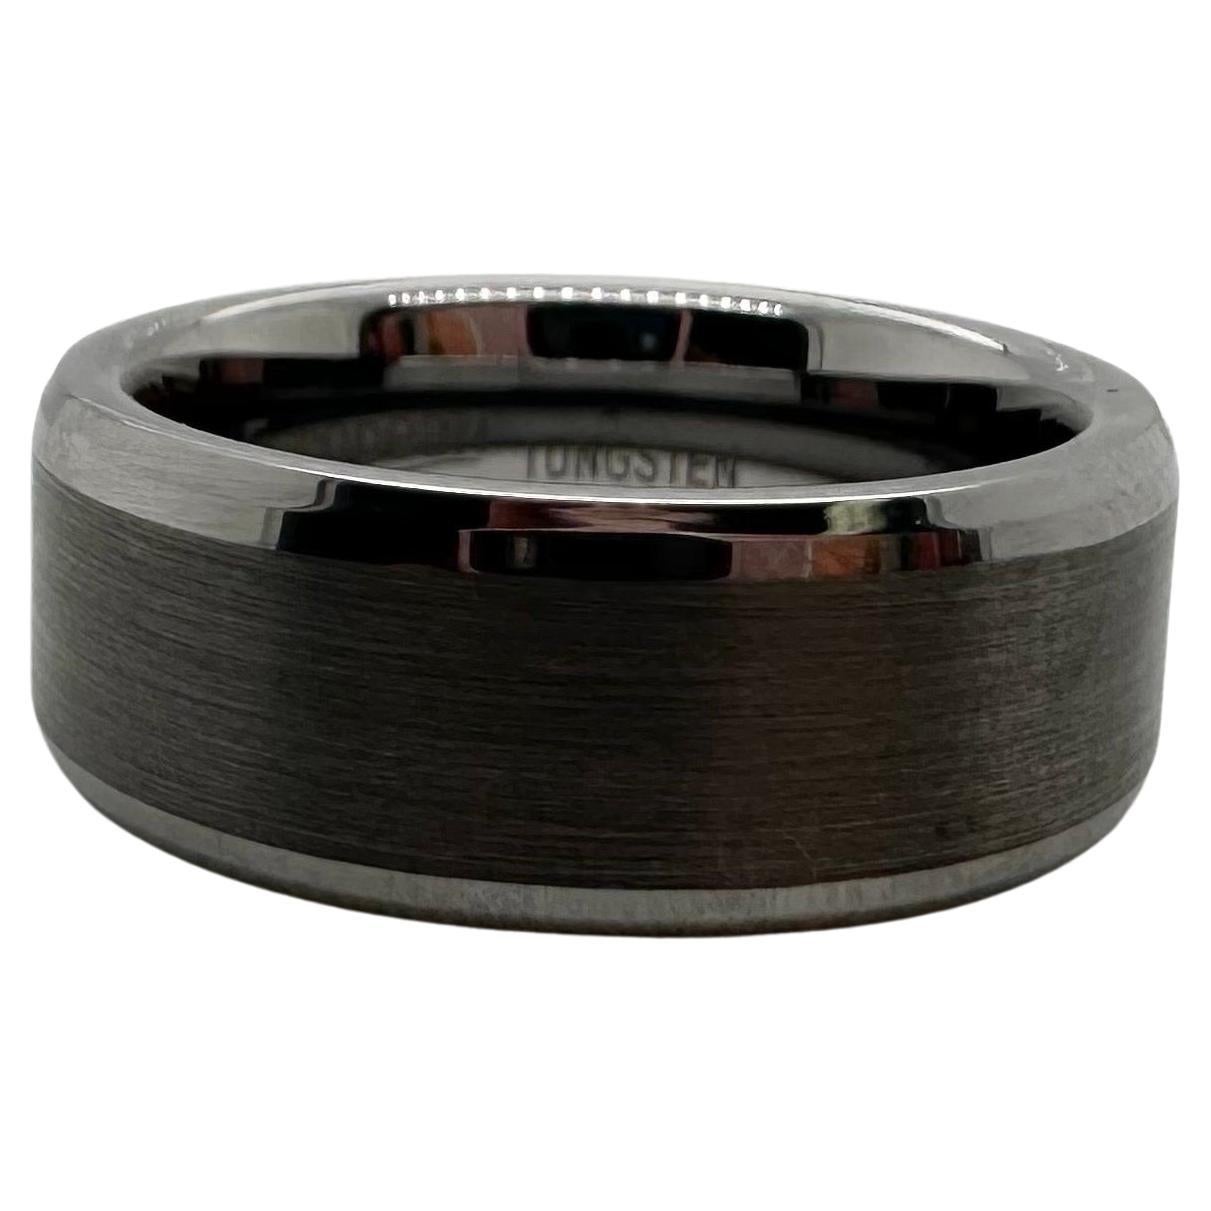 Mens 8mm wedding band size 8 tungsten triton ring